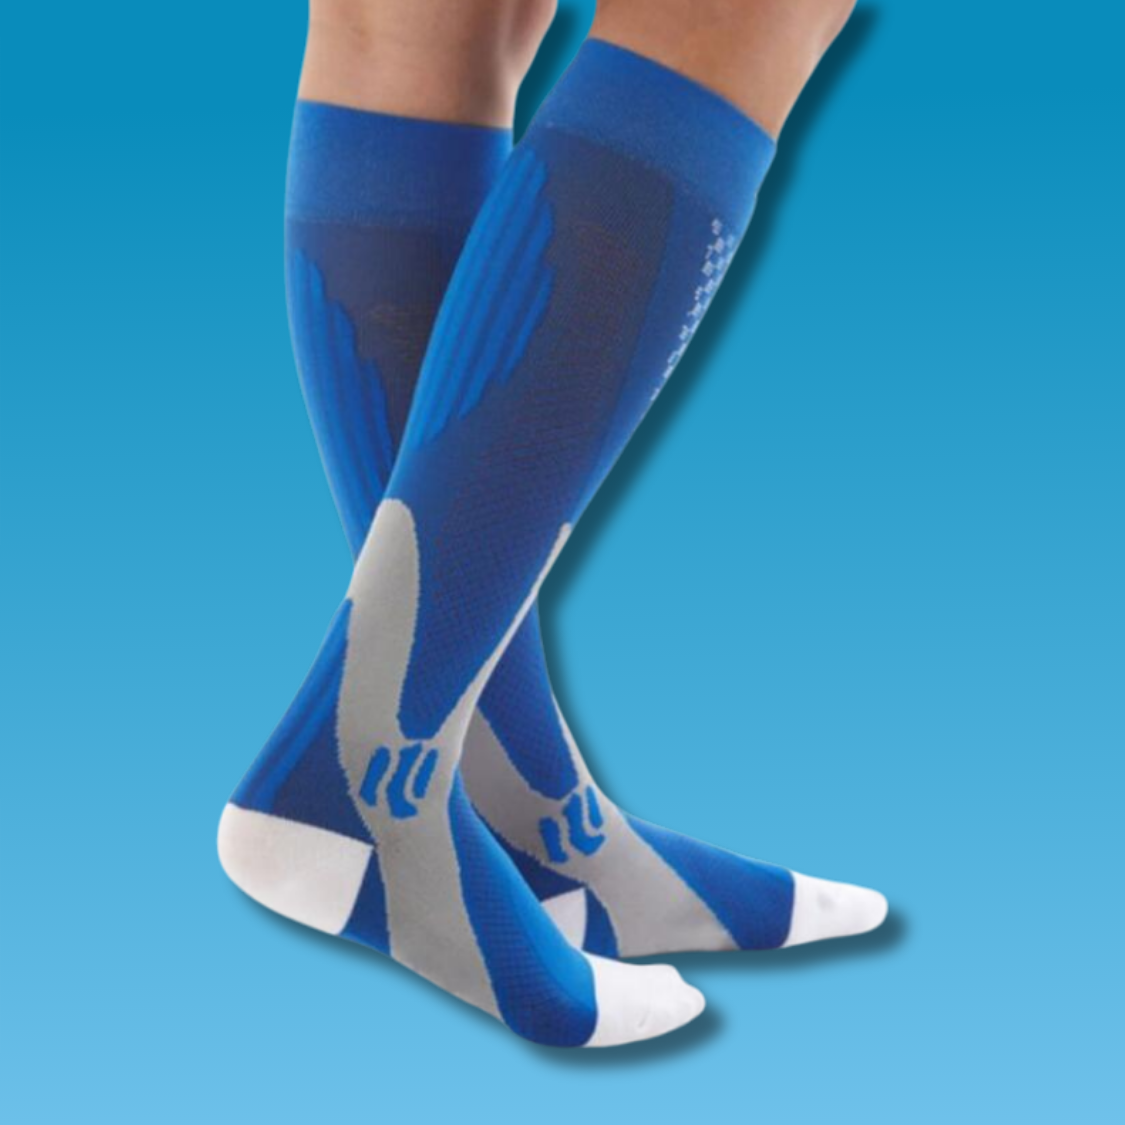 Advanced Compression Socks | Buy 1 Get 1 Free Deal